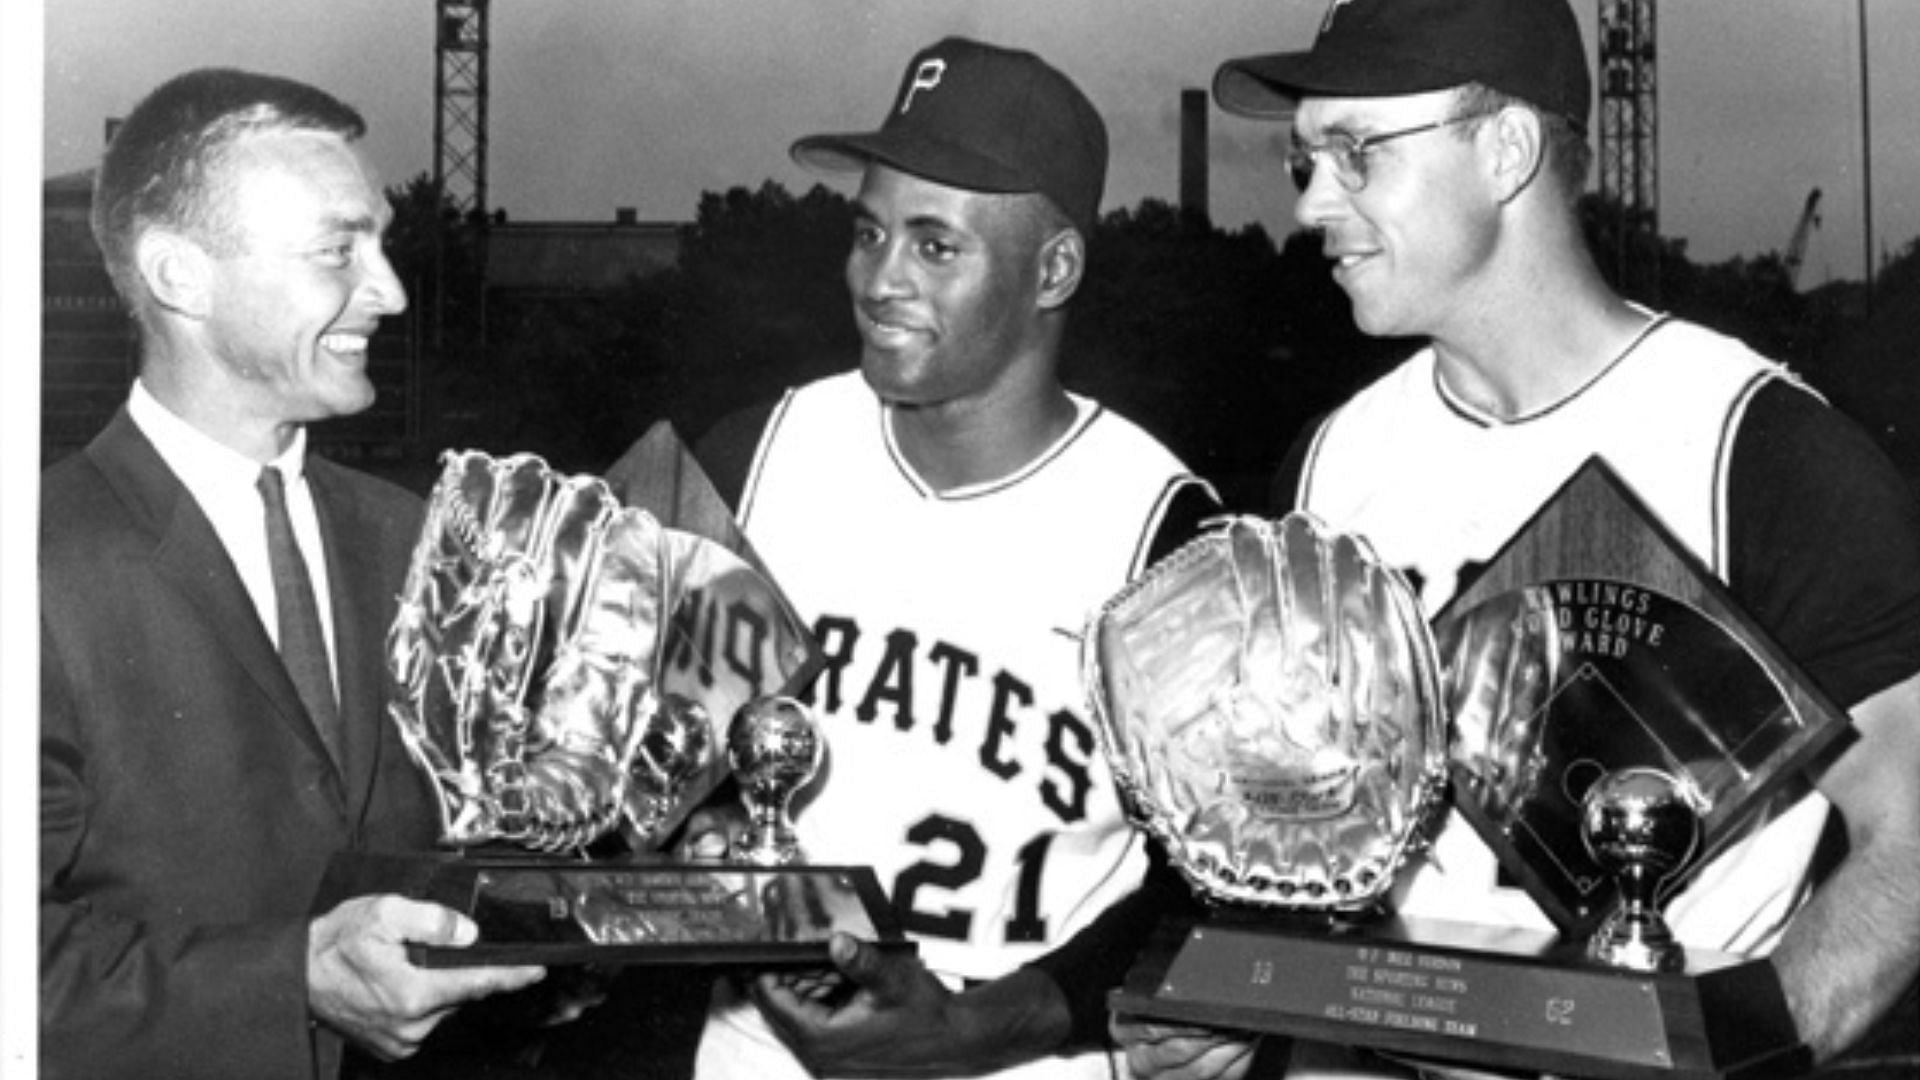 Pirates Have Three Gold Glove Finalists – Pittsburgh Baseball